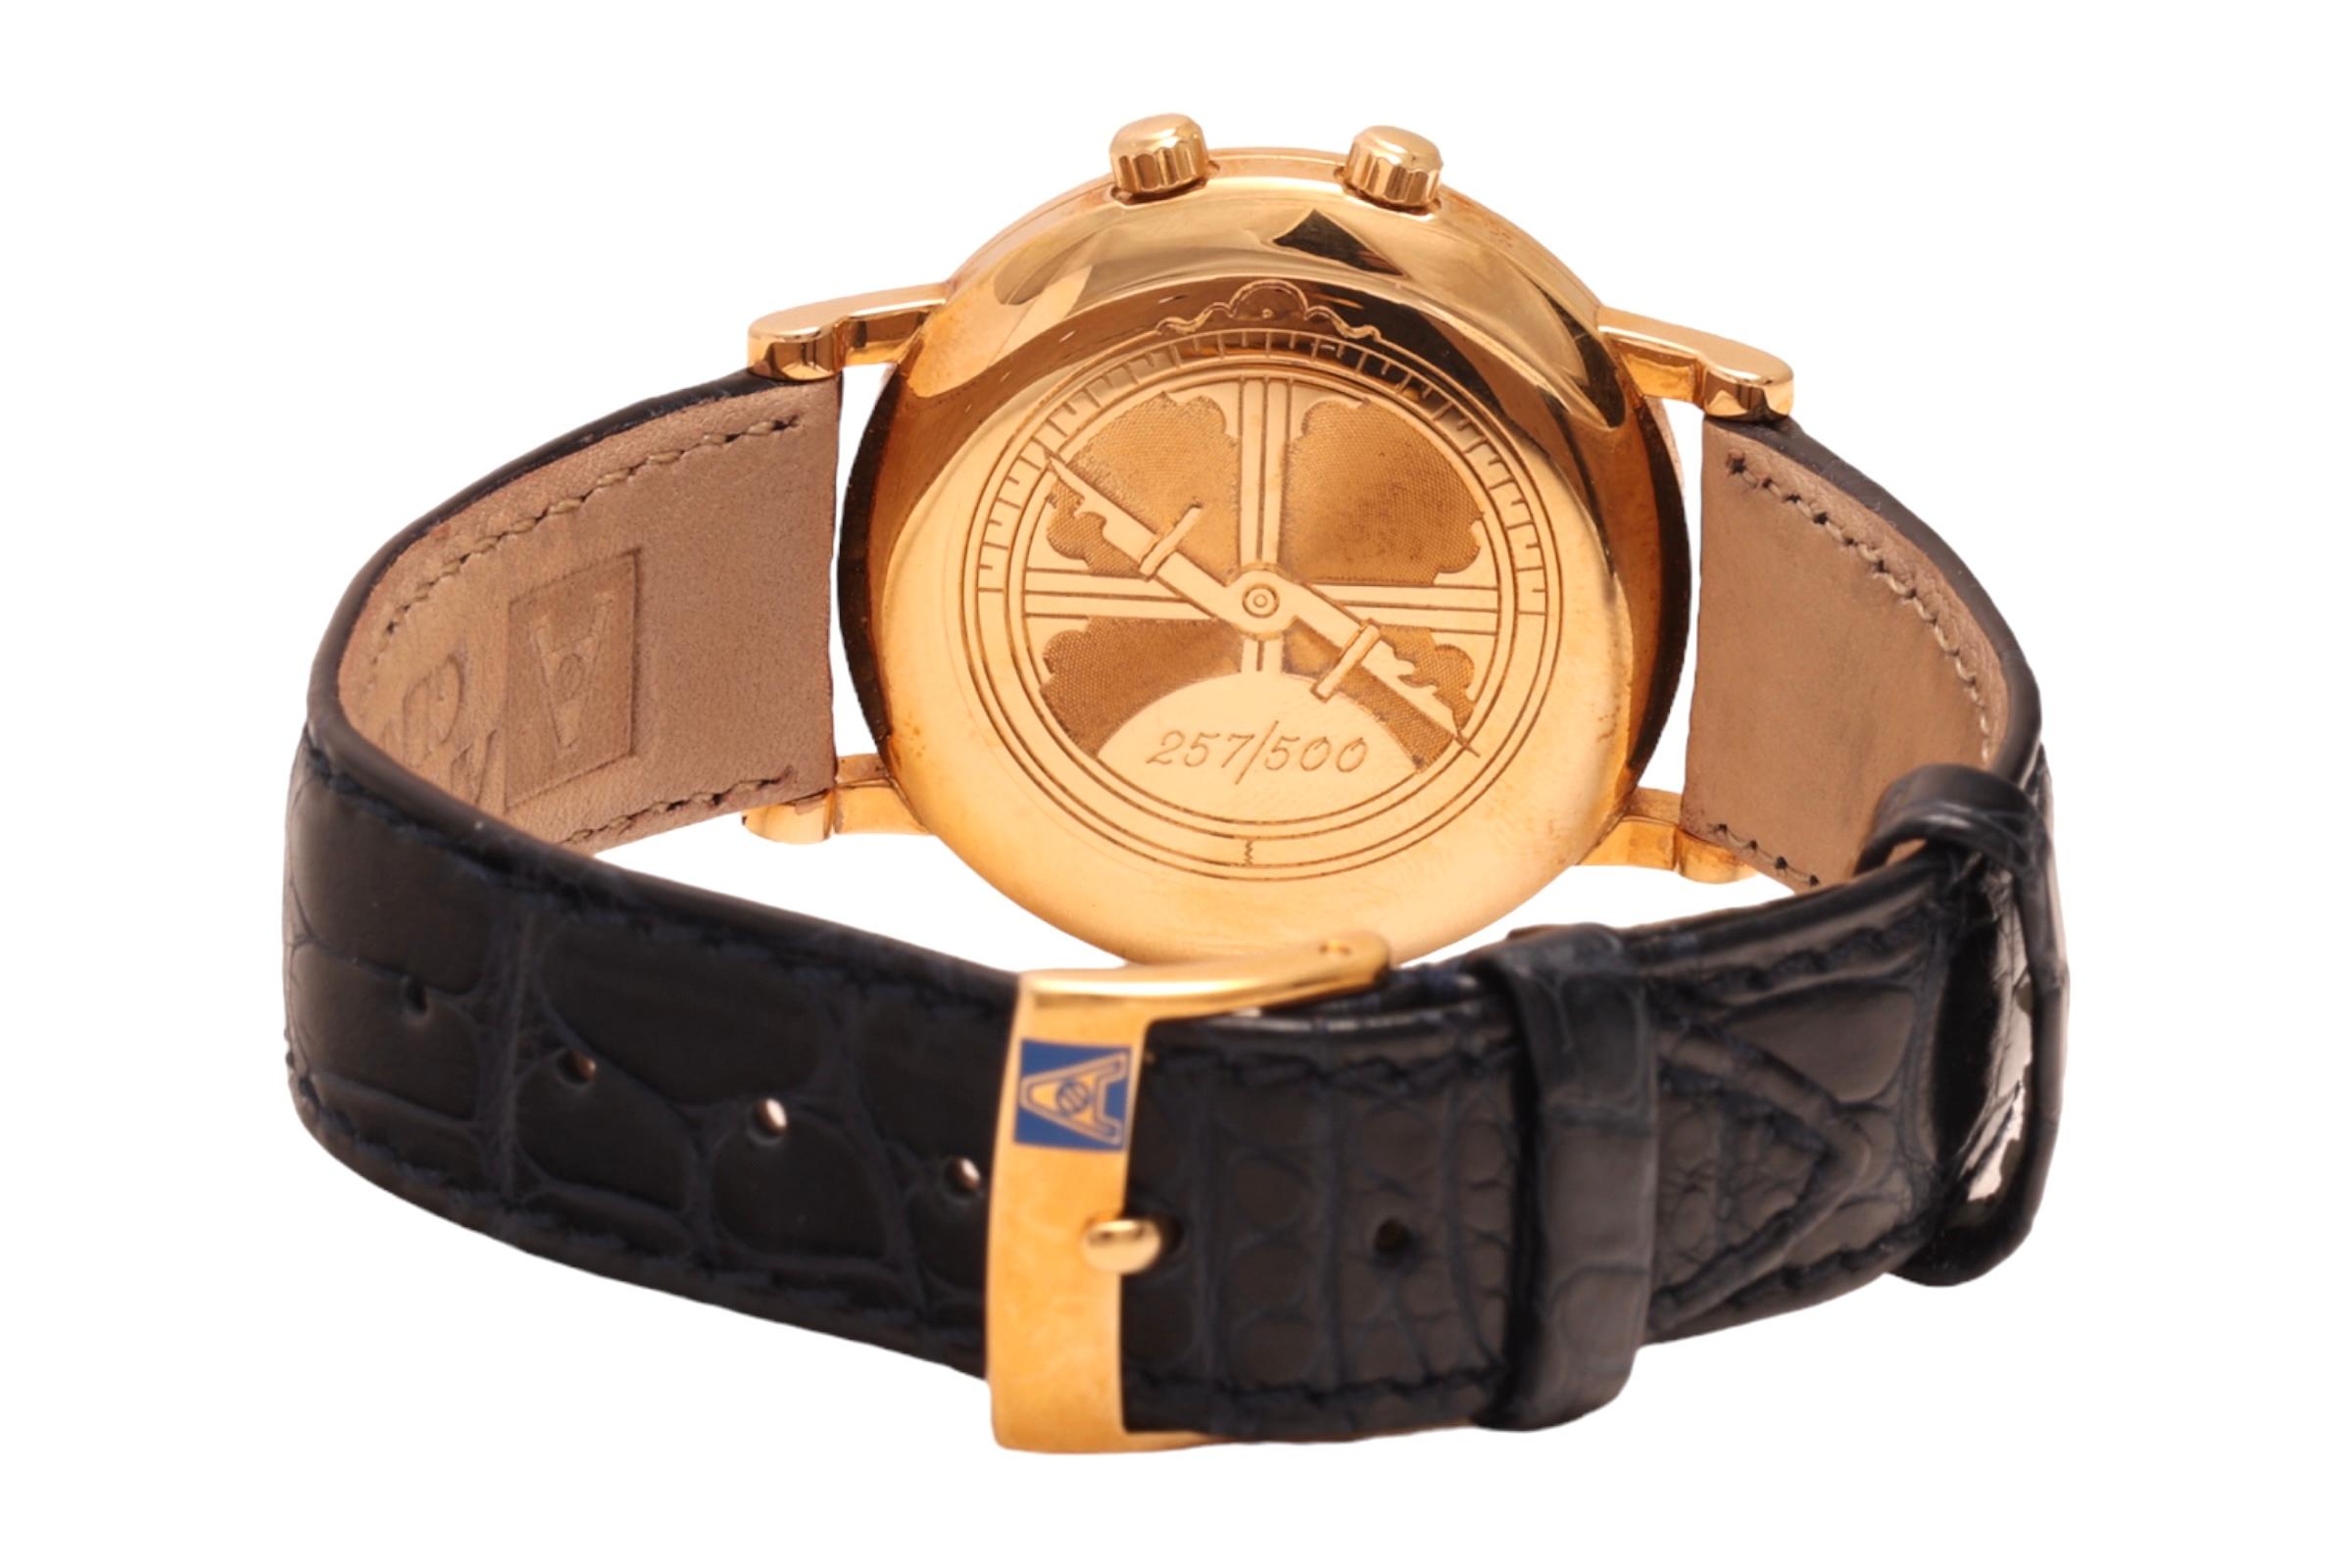 18 kt Gold Svend Andersen Worldtimer Limited Wrist Watch For Sale 1